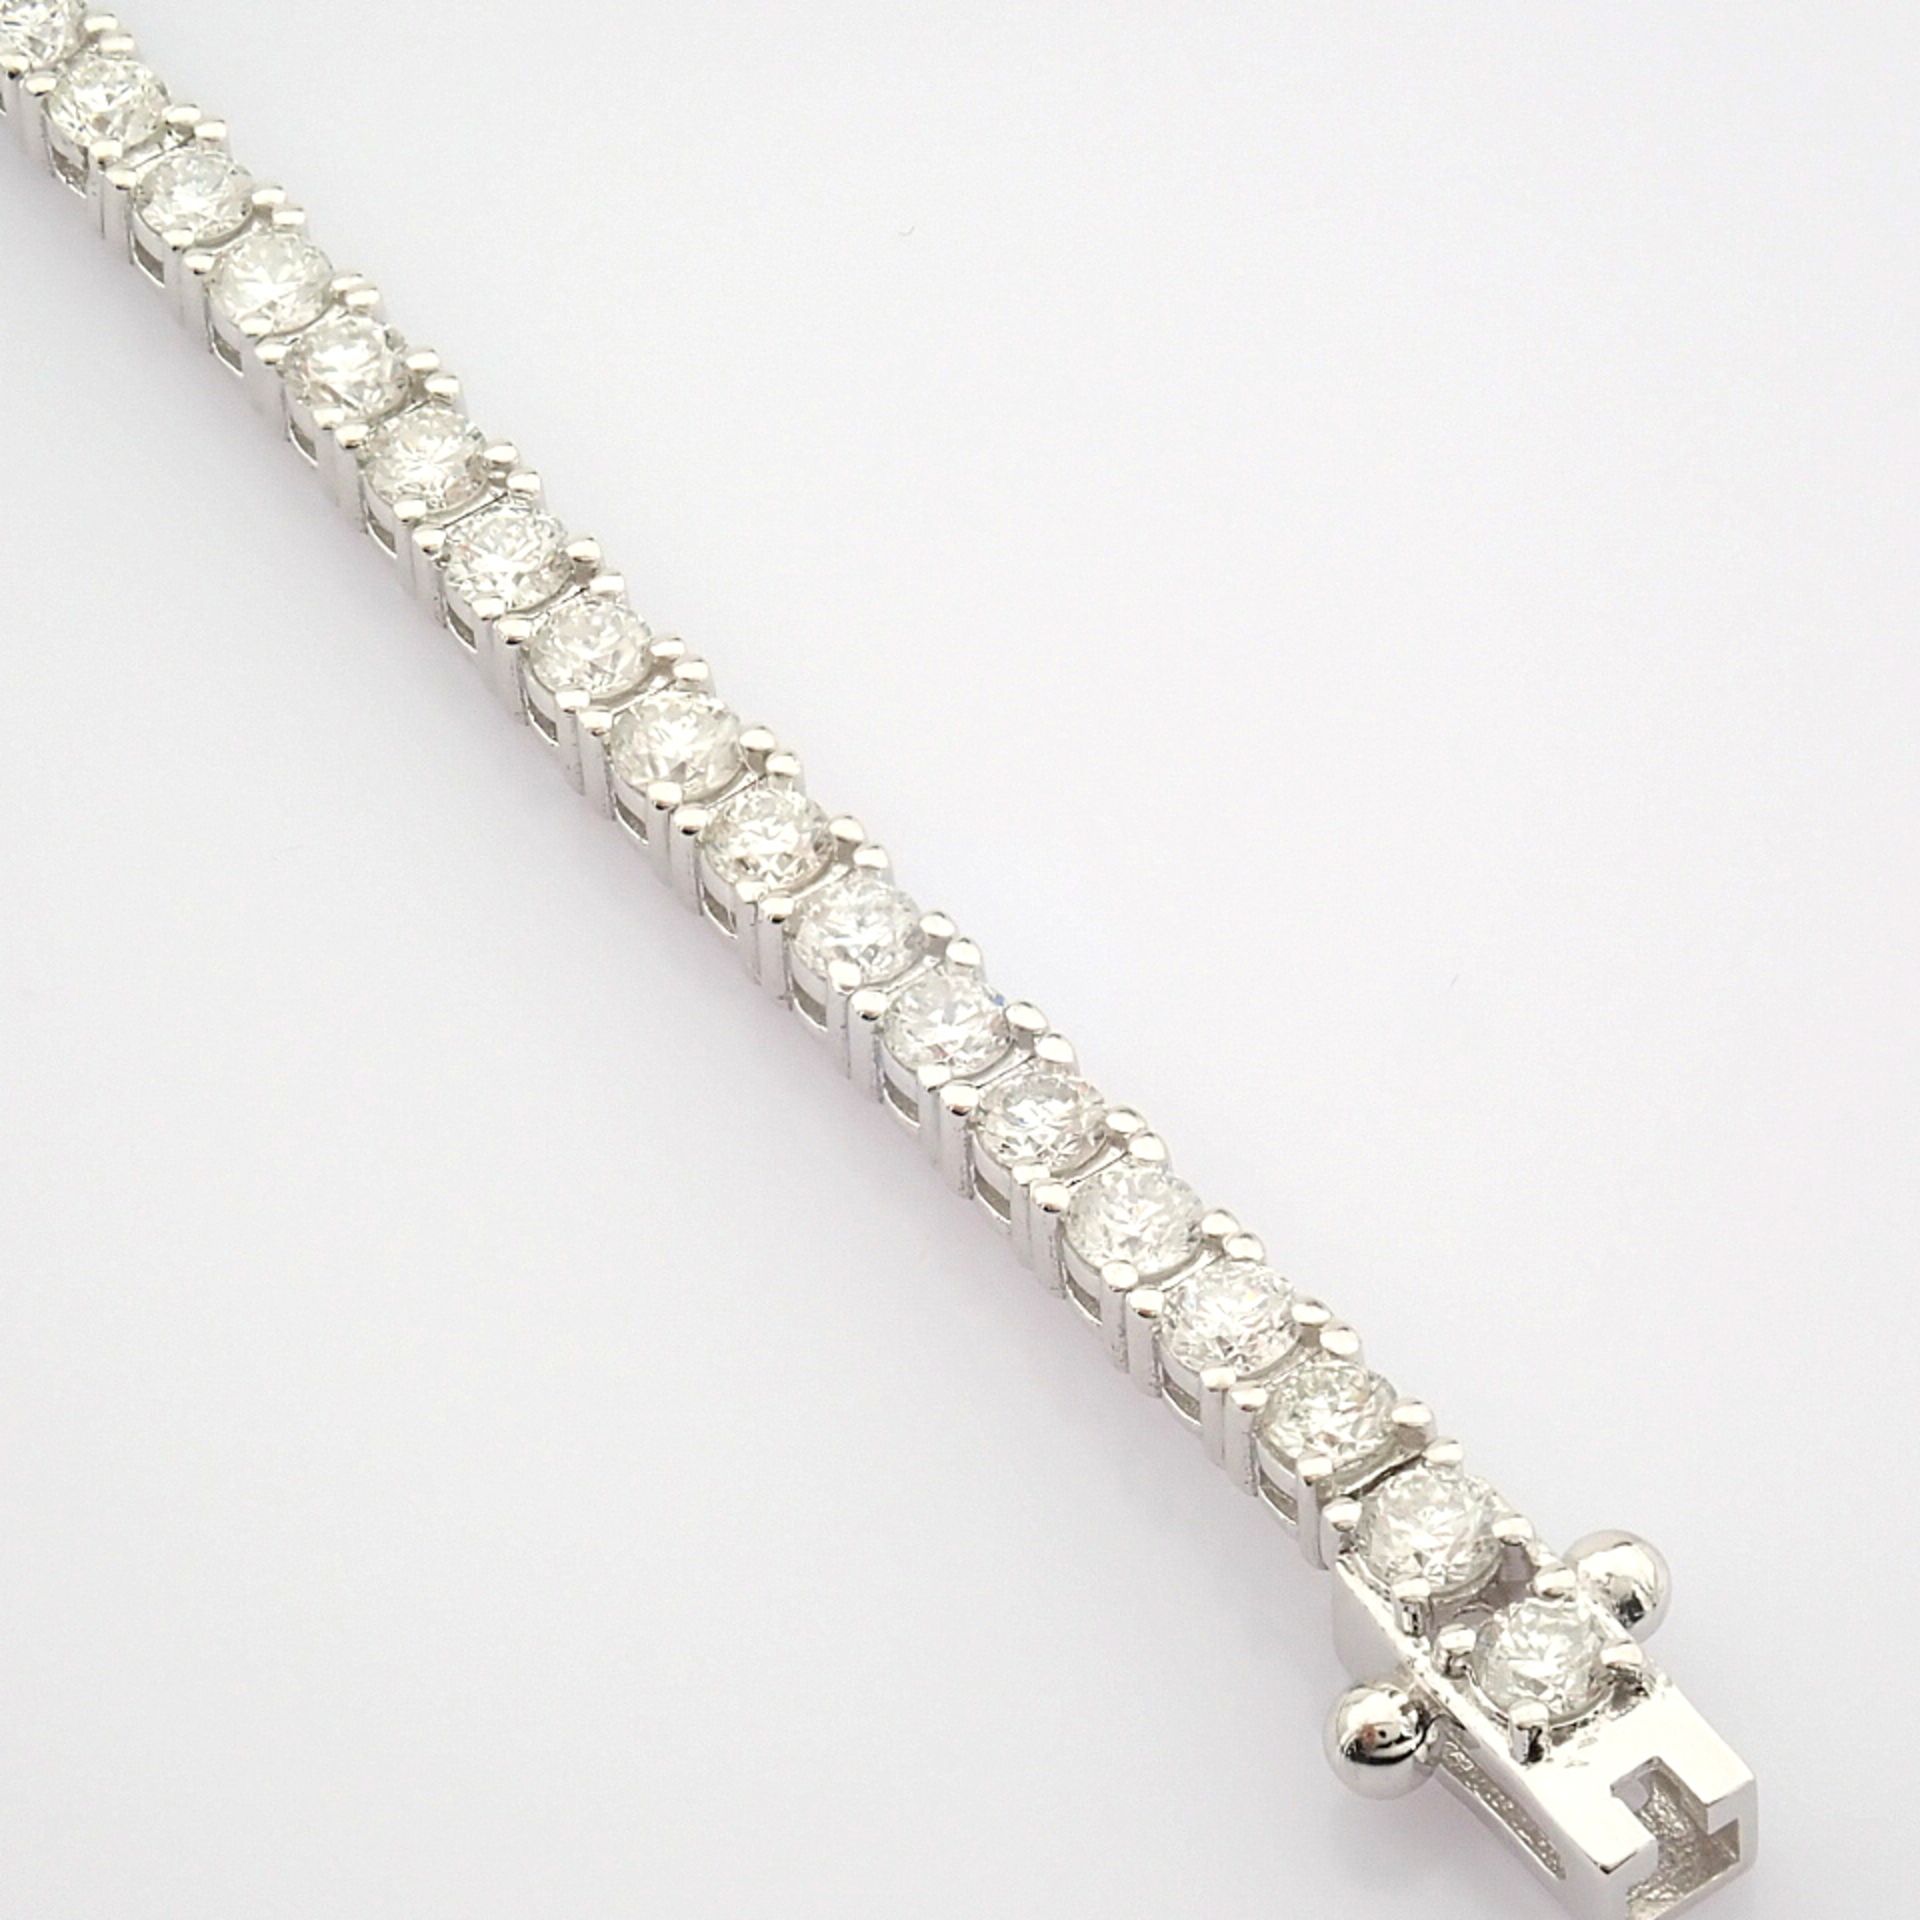 Certificated 14K White Gold Diamond Bracelet (Total 3.02 ct Stone) - Image 4 of 18